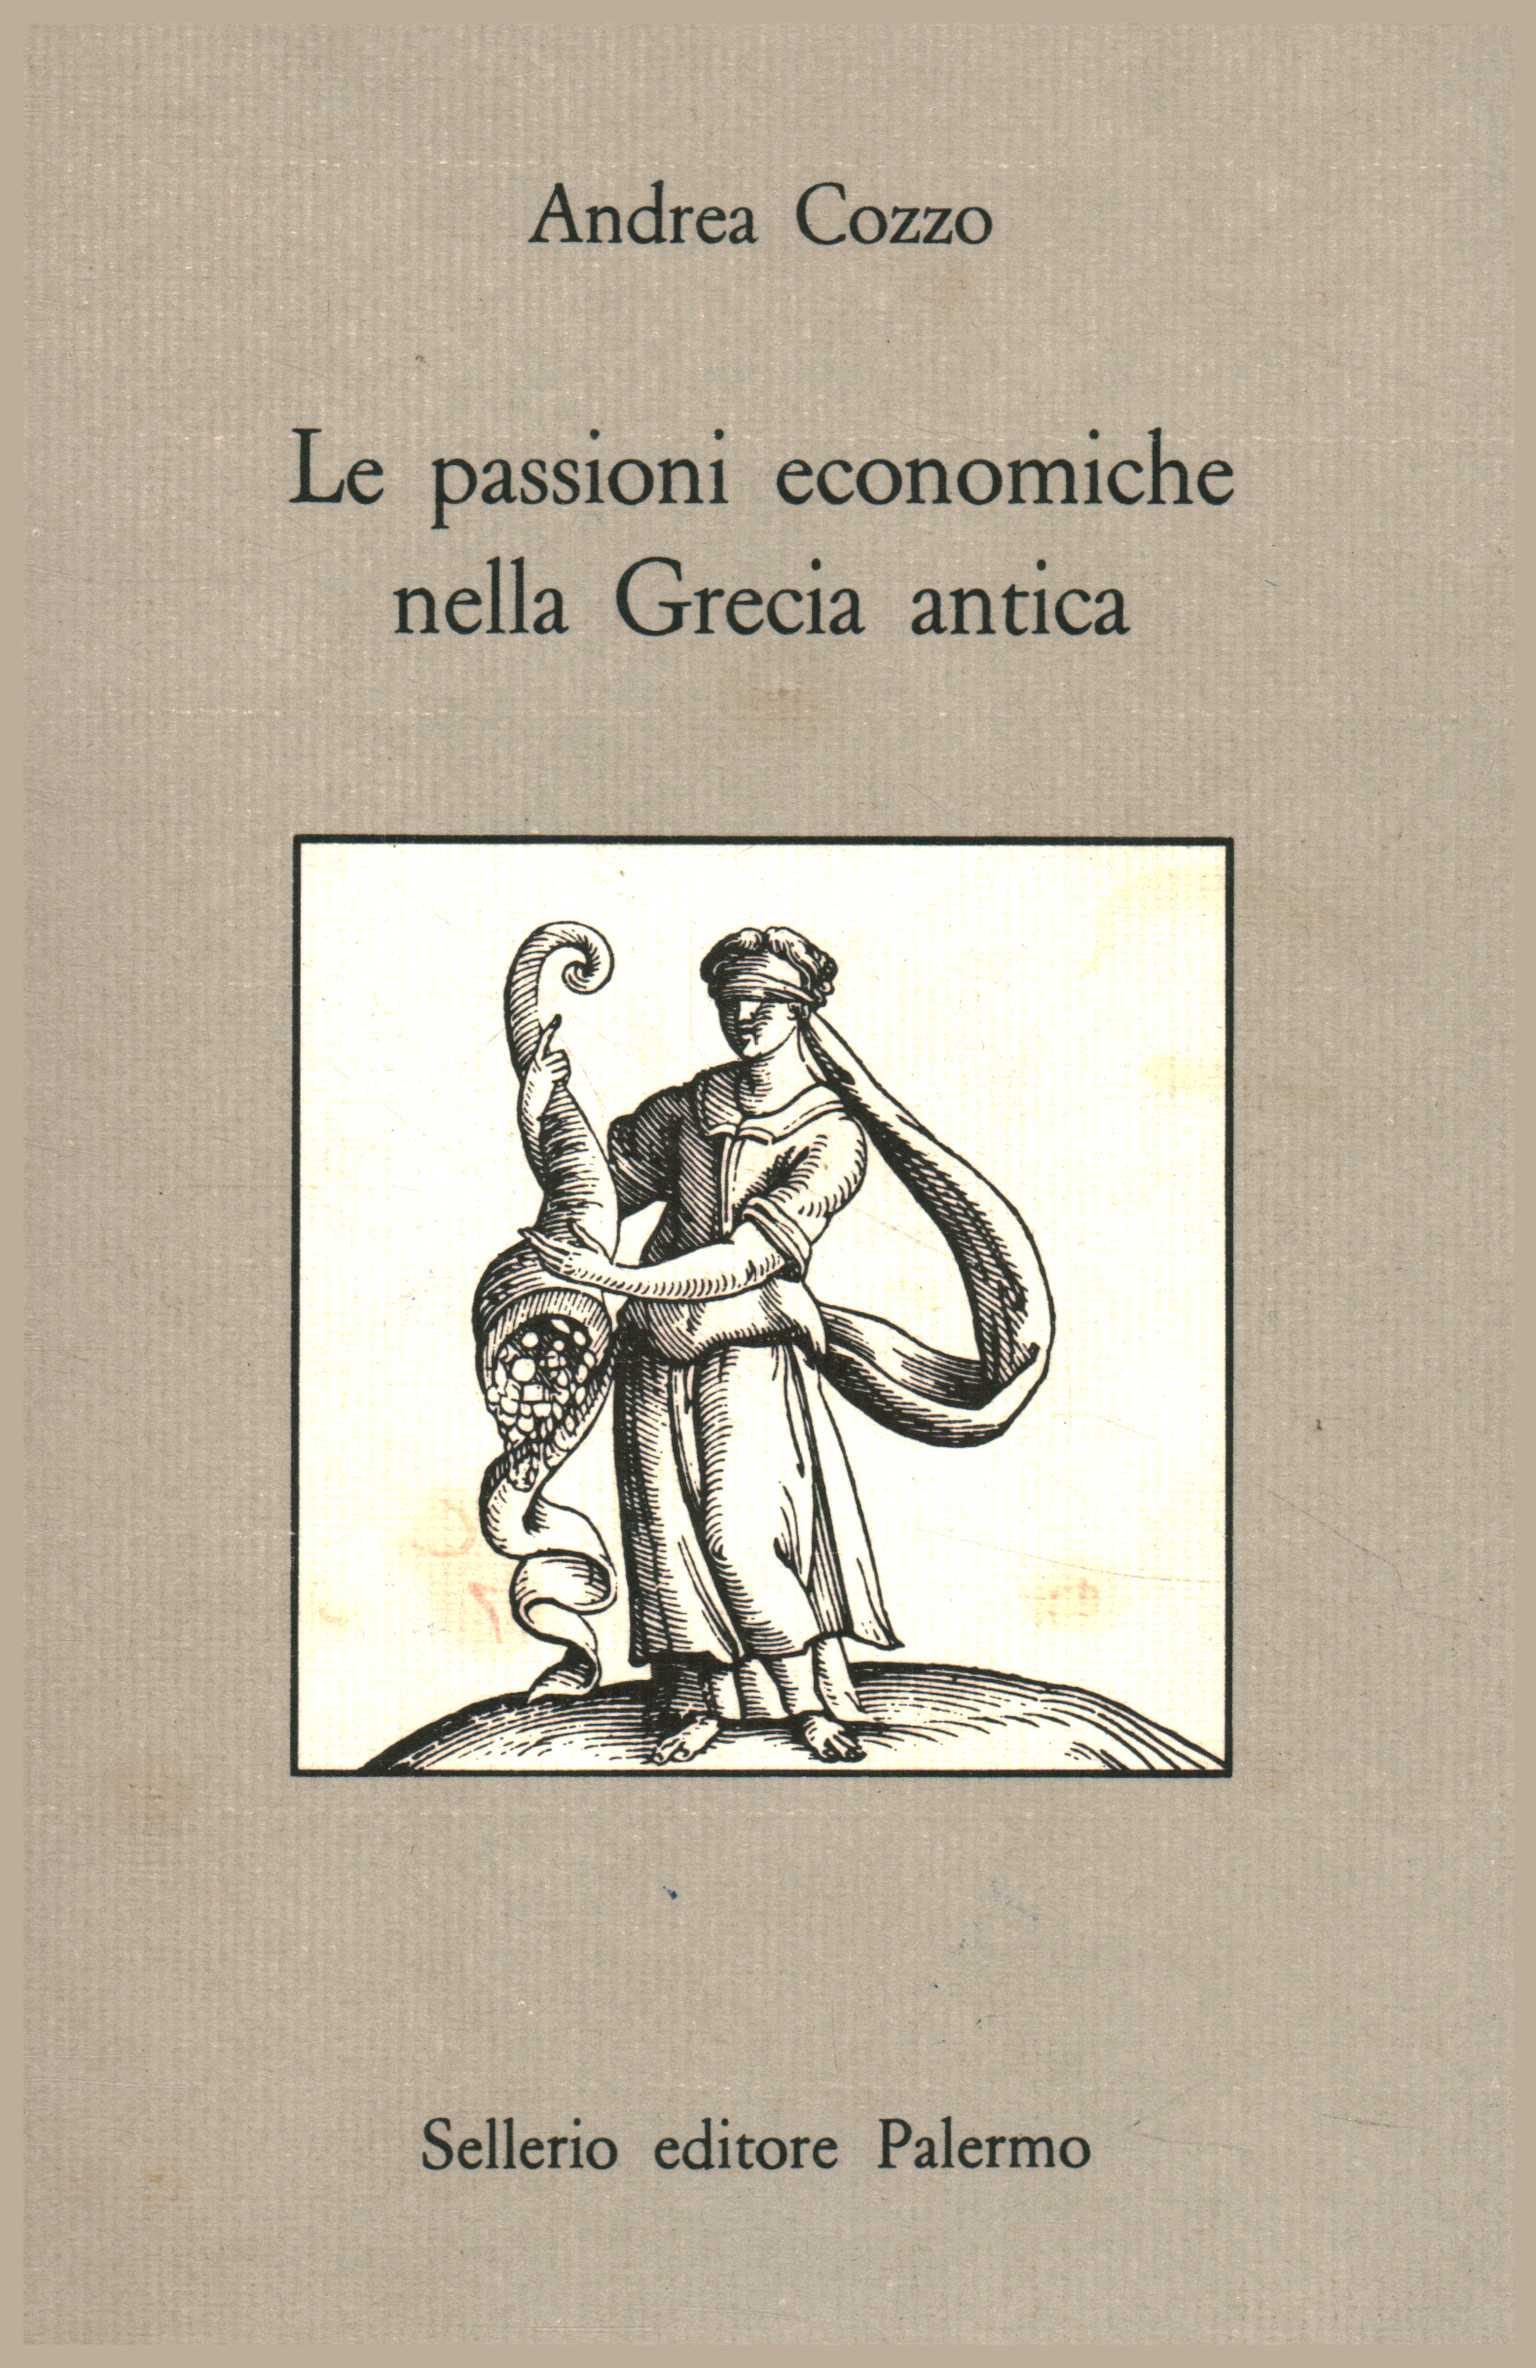 The economic passions in anti-Greece